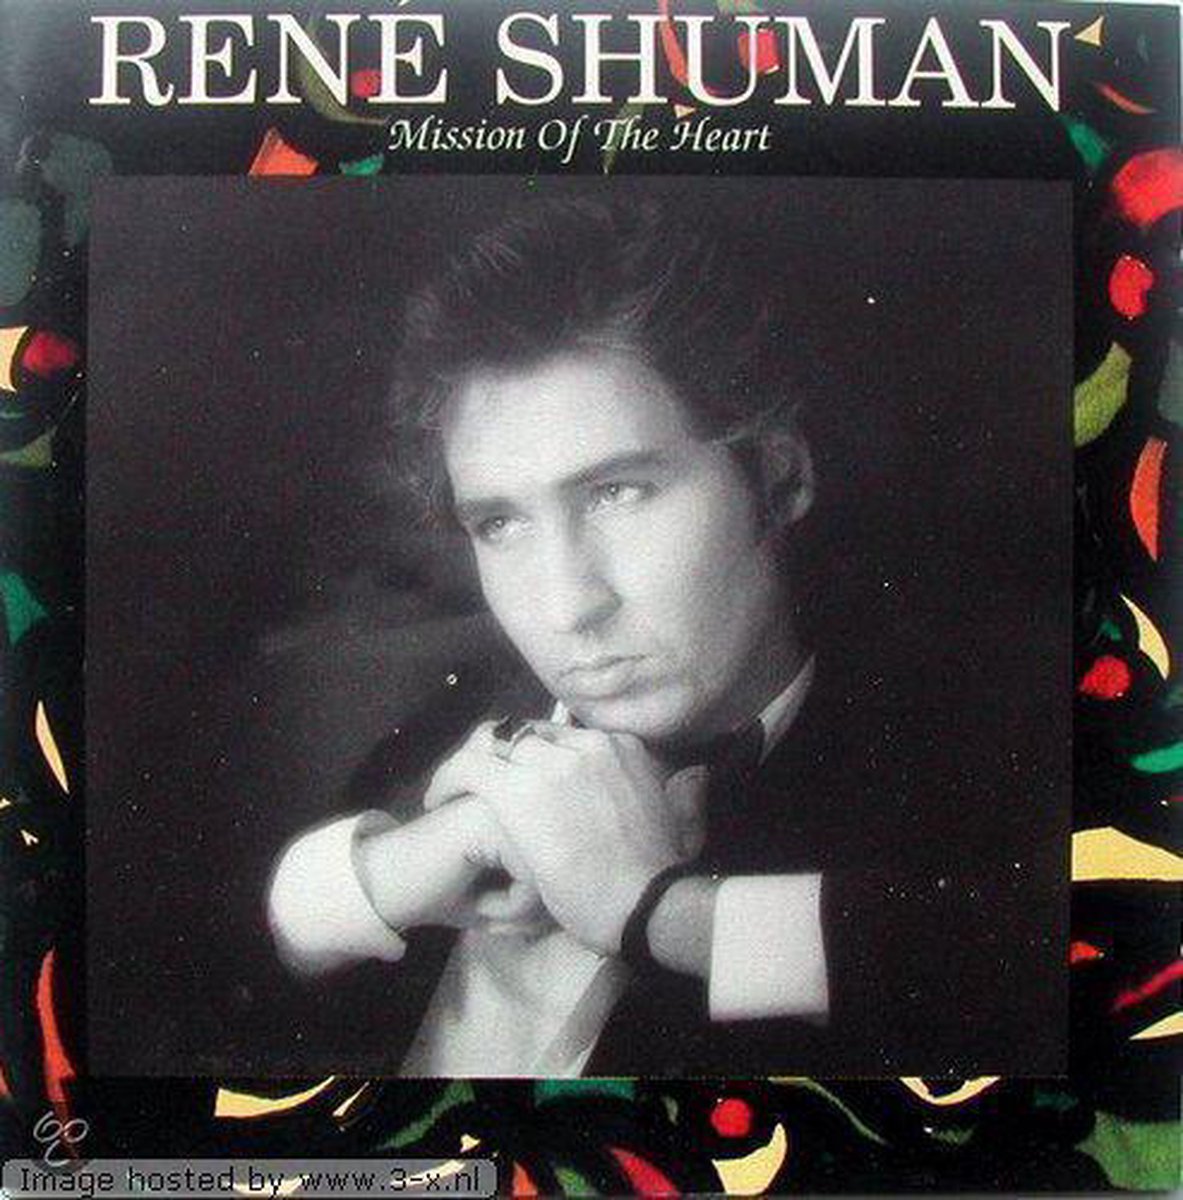 René Shuman - Mission Of The Heart. - Rene Shuman